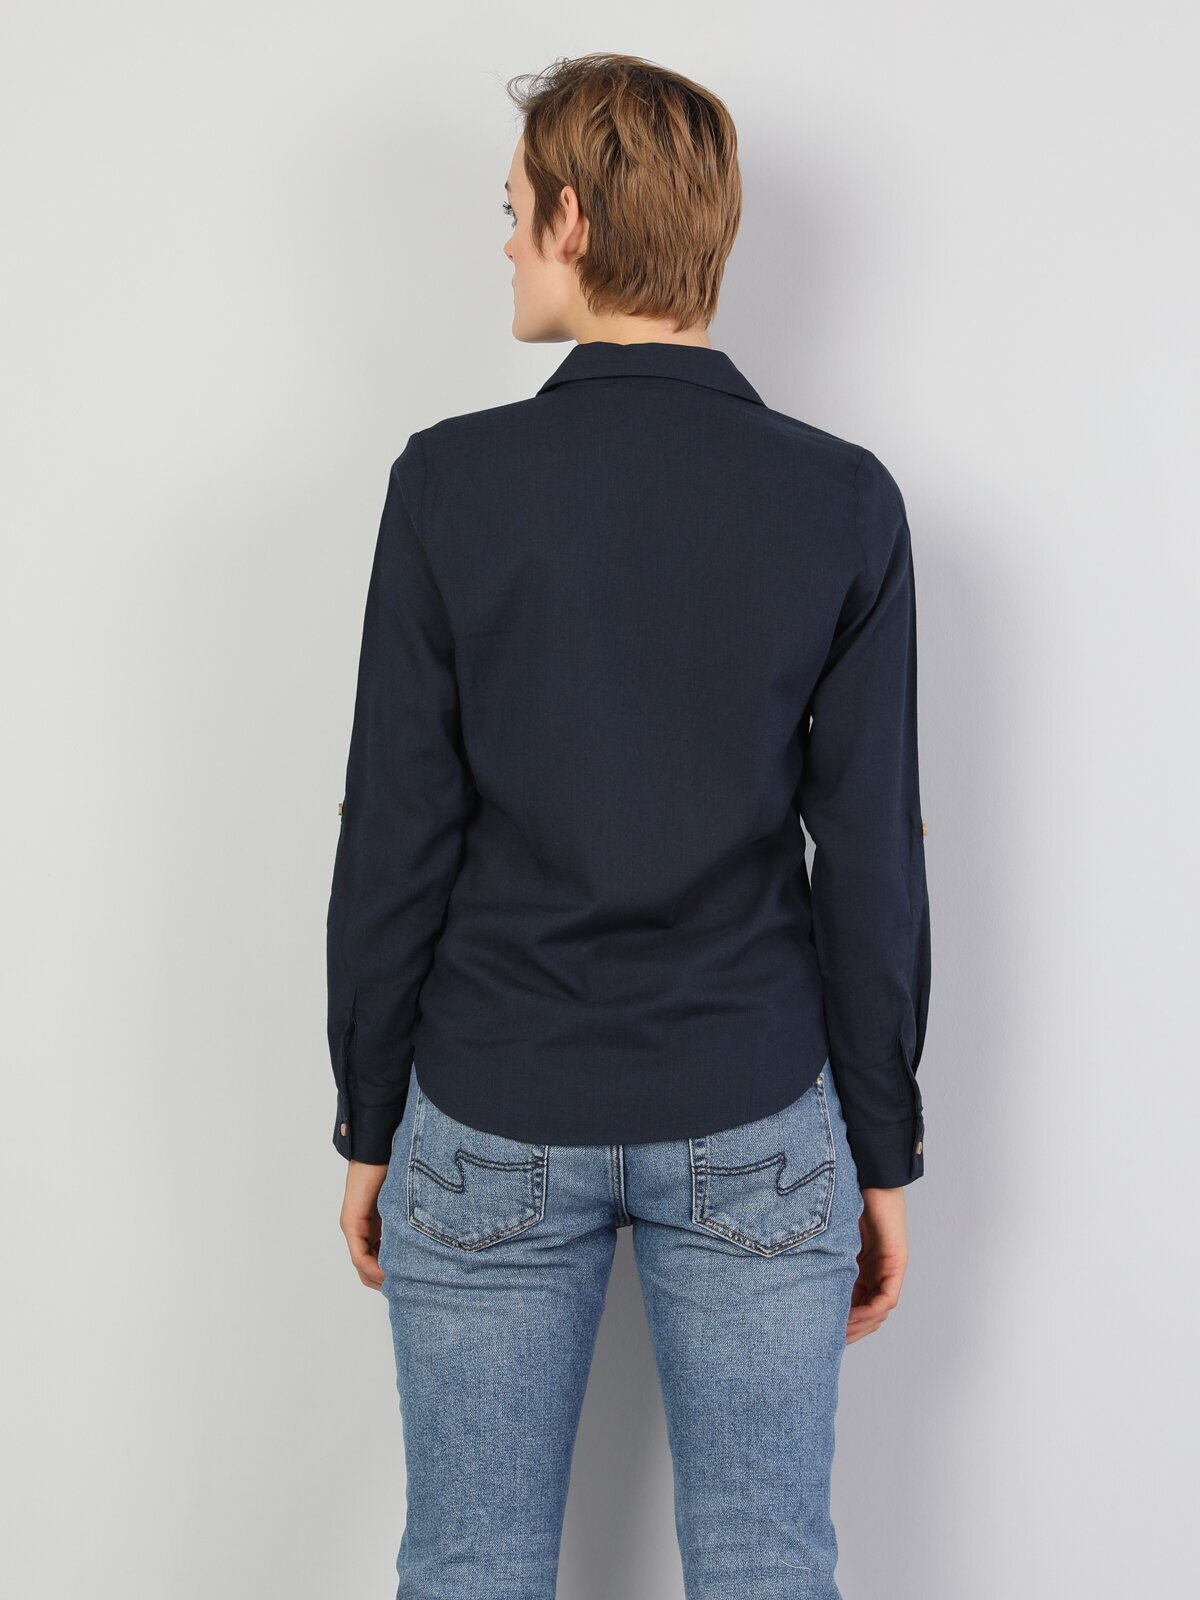 Colins Slim Fit Shirt Neck Kadın Lacivert Uzun Kol Bluz. 2